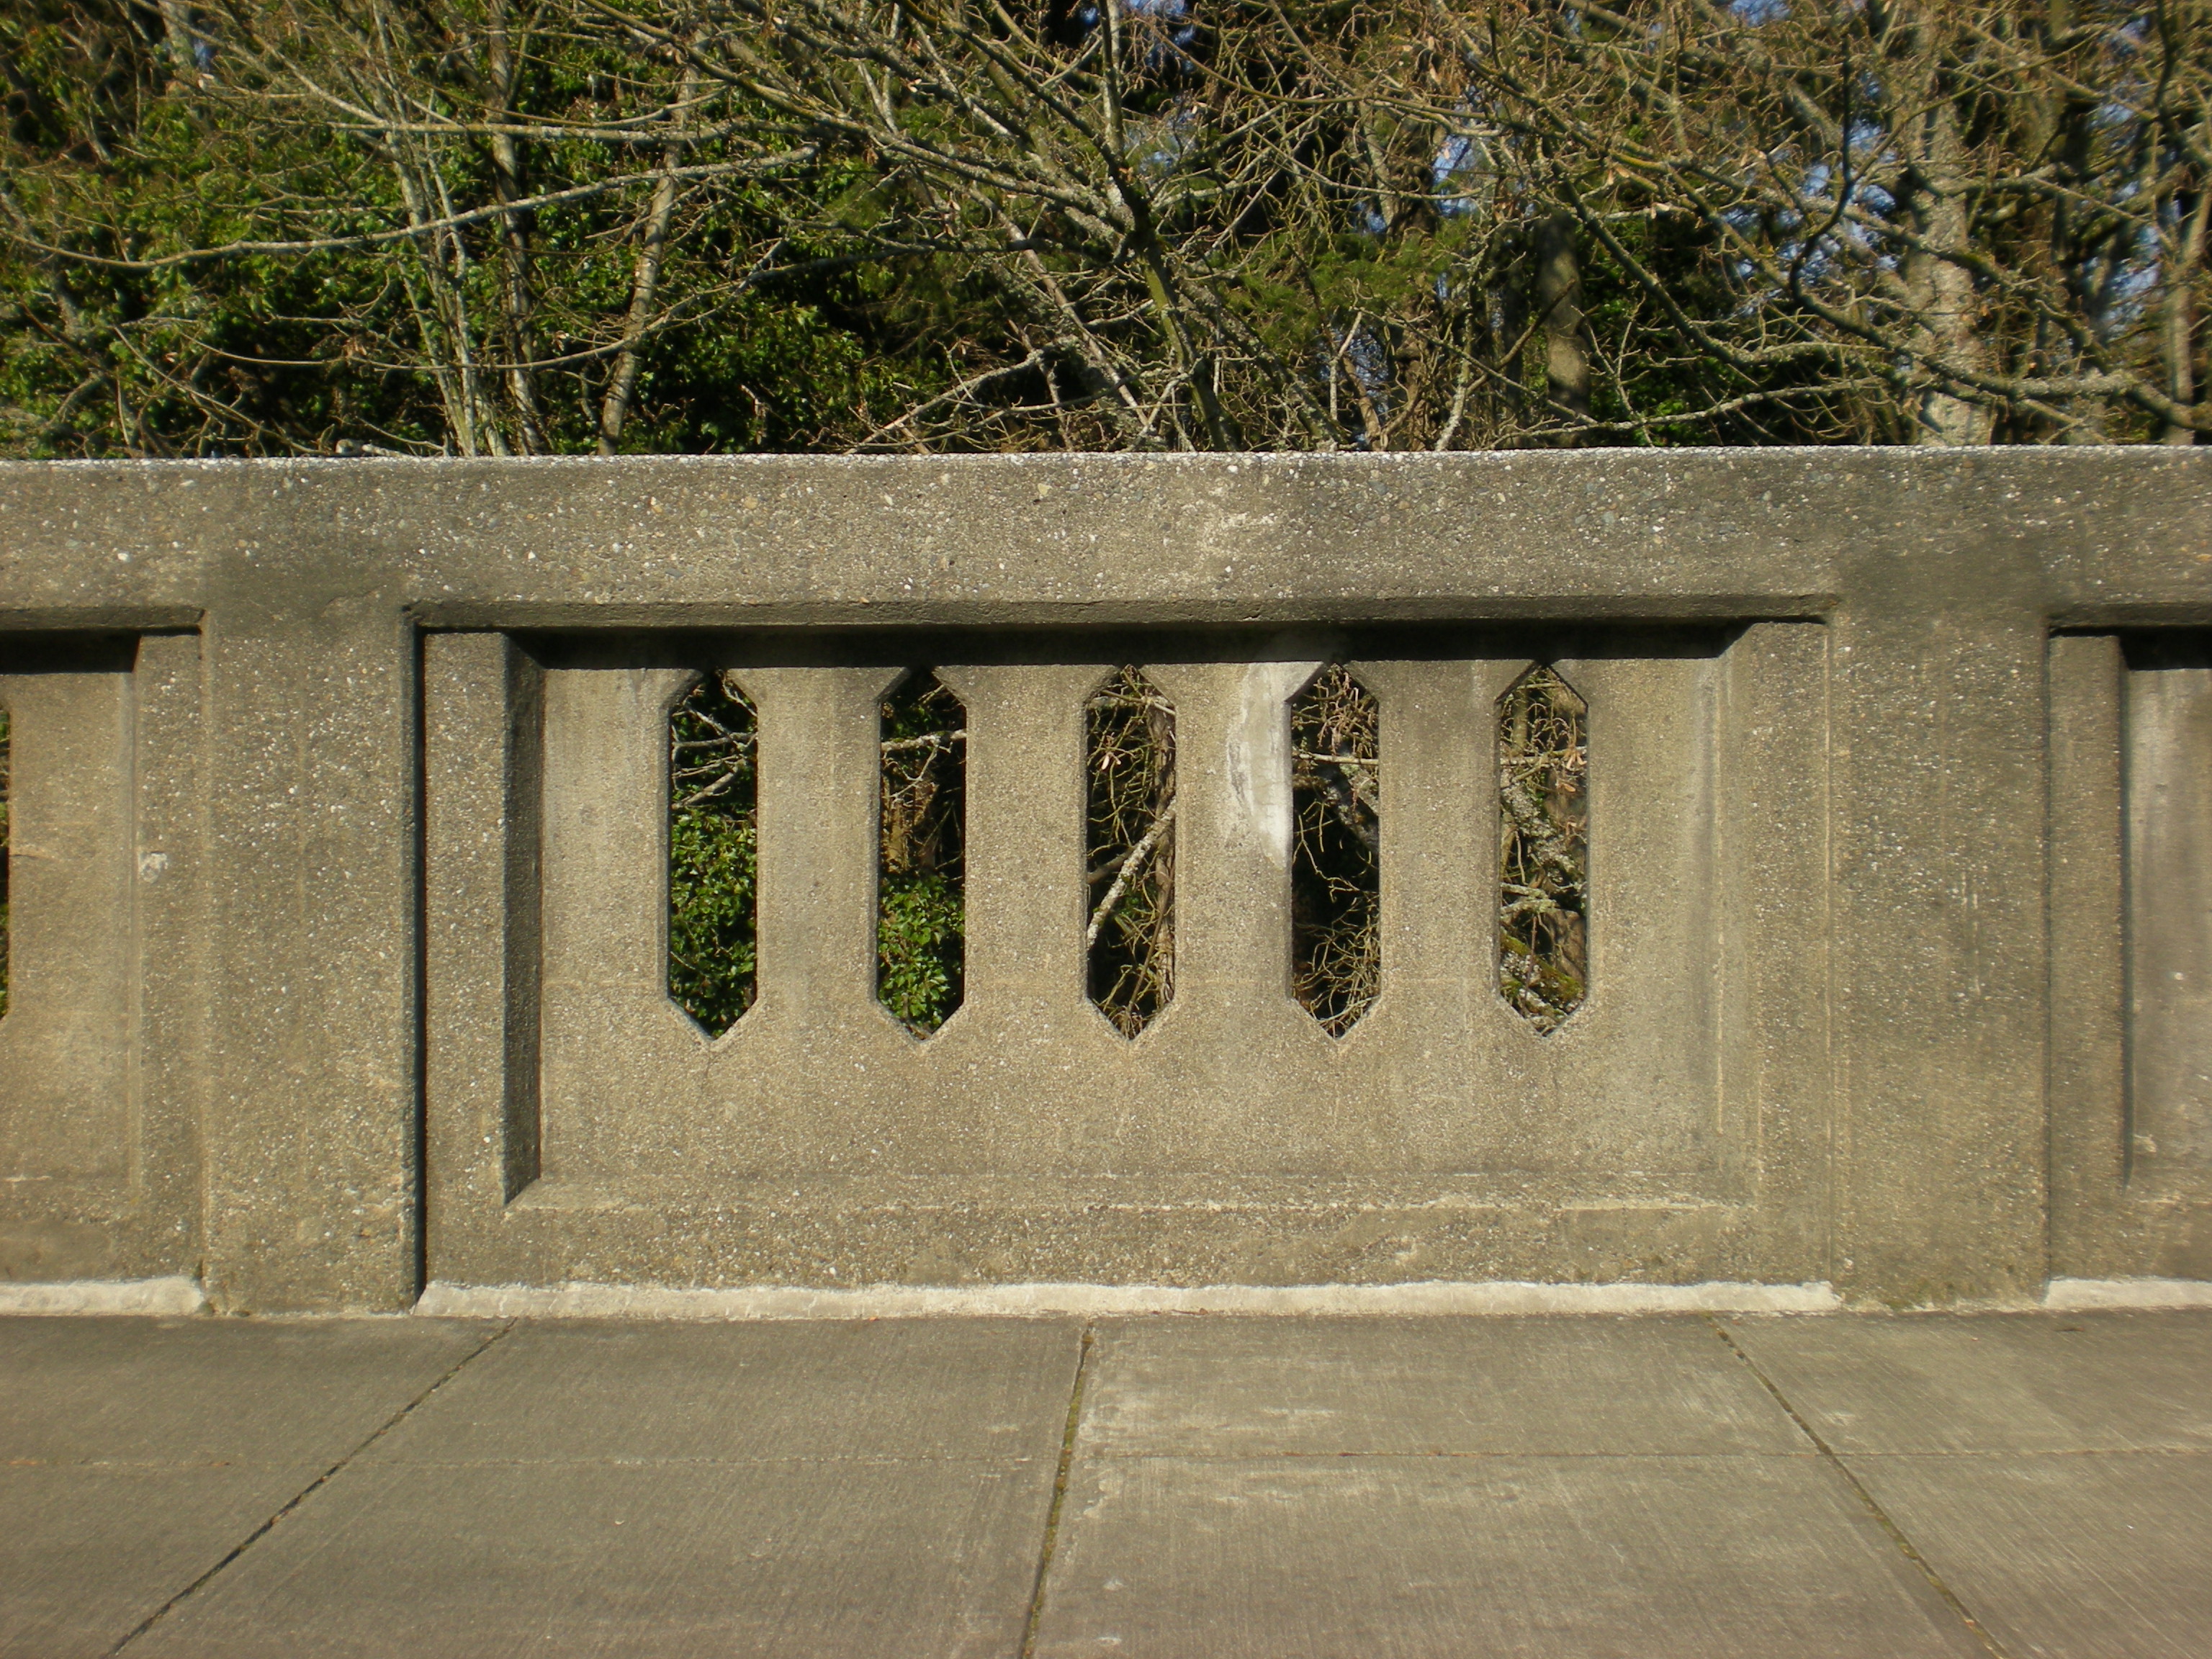 File:North 23rd Street Bridge railing.jpg - Wikimedia Commons